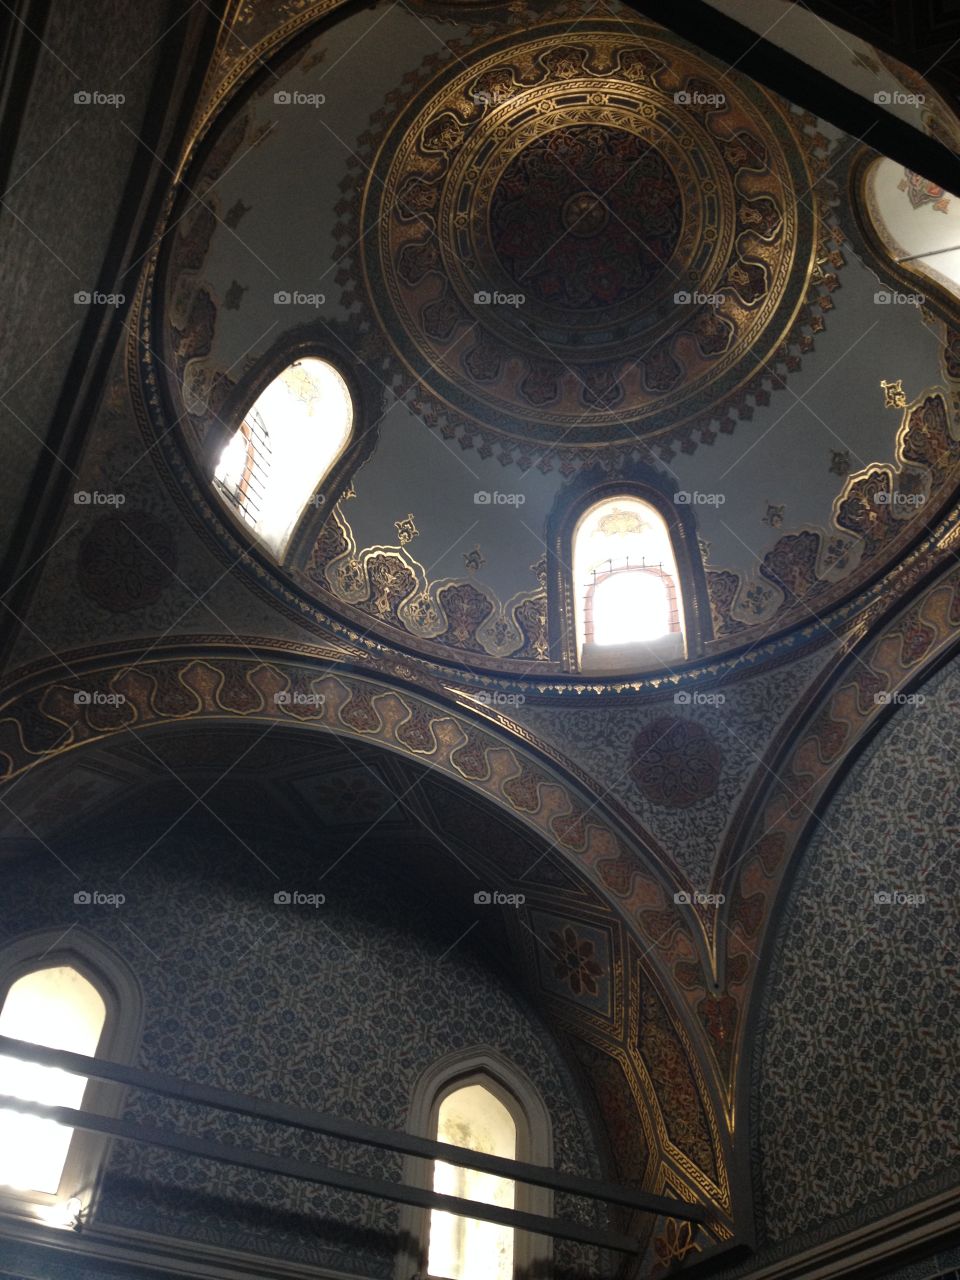 Ceiling, Indoors, Religion, Inside, Architecture